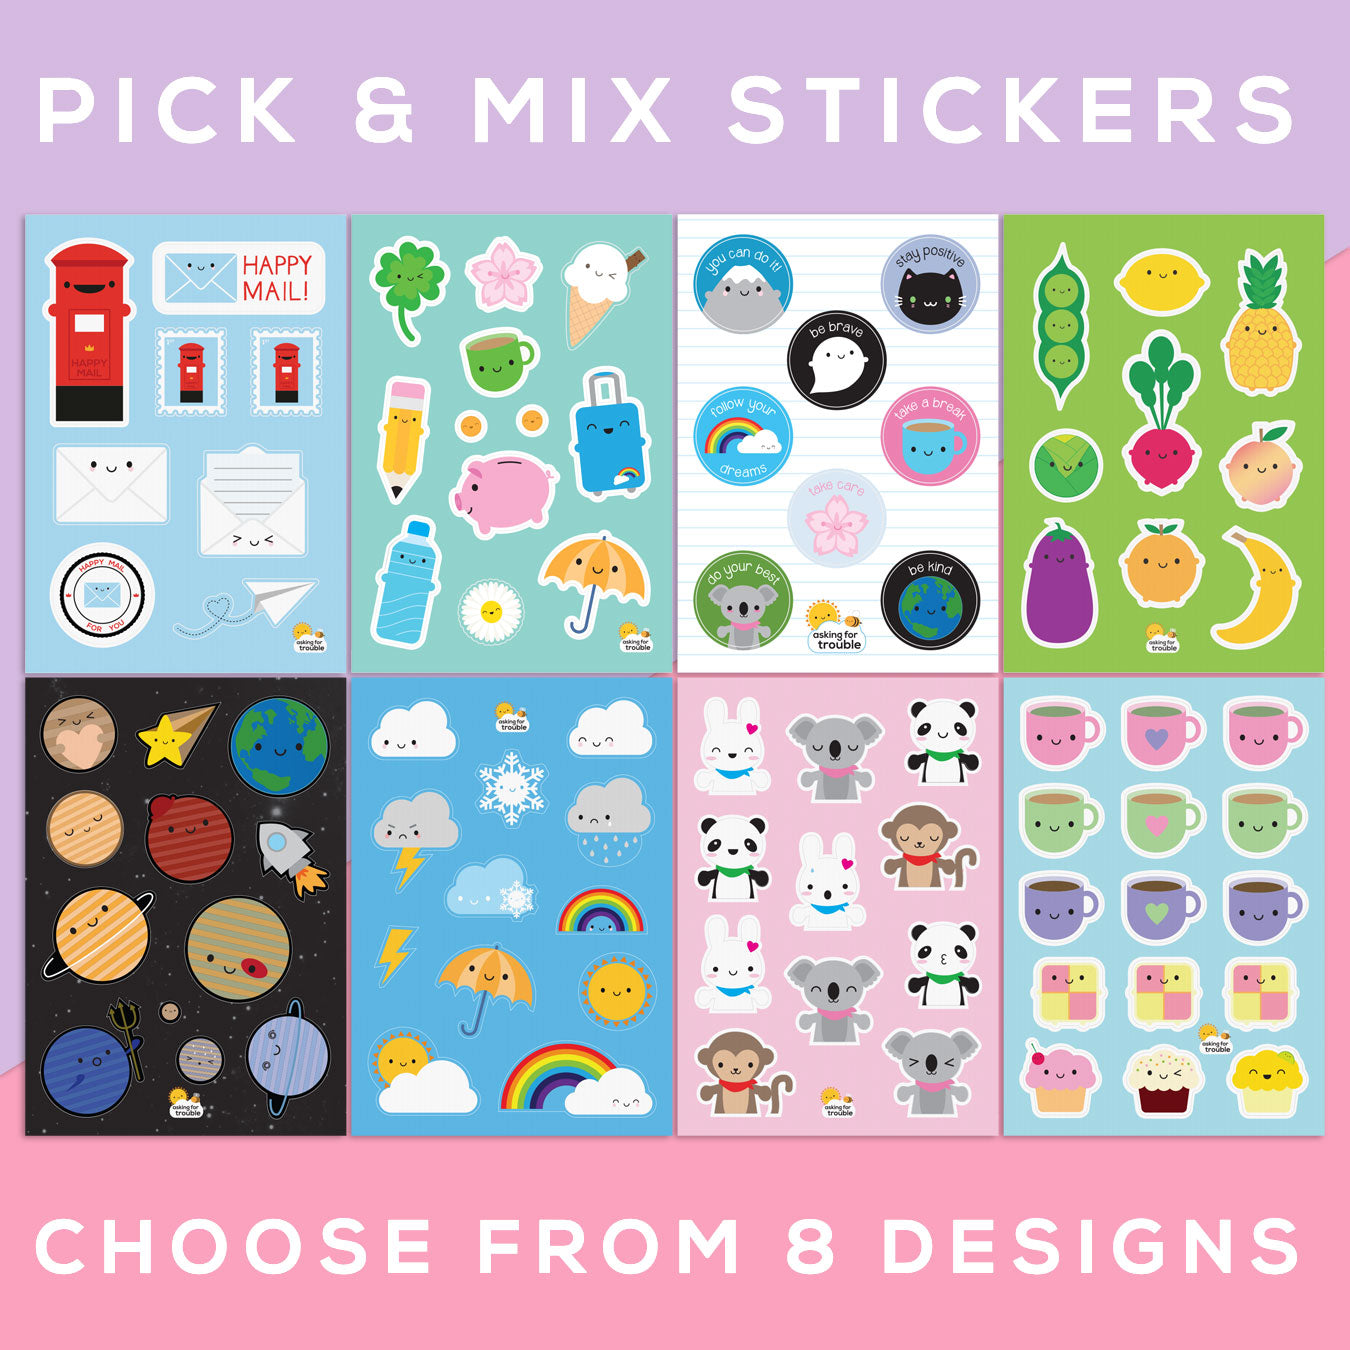 All 8 kawaii sticker sheet designs in the pick & mix offer